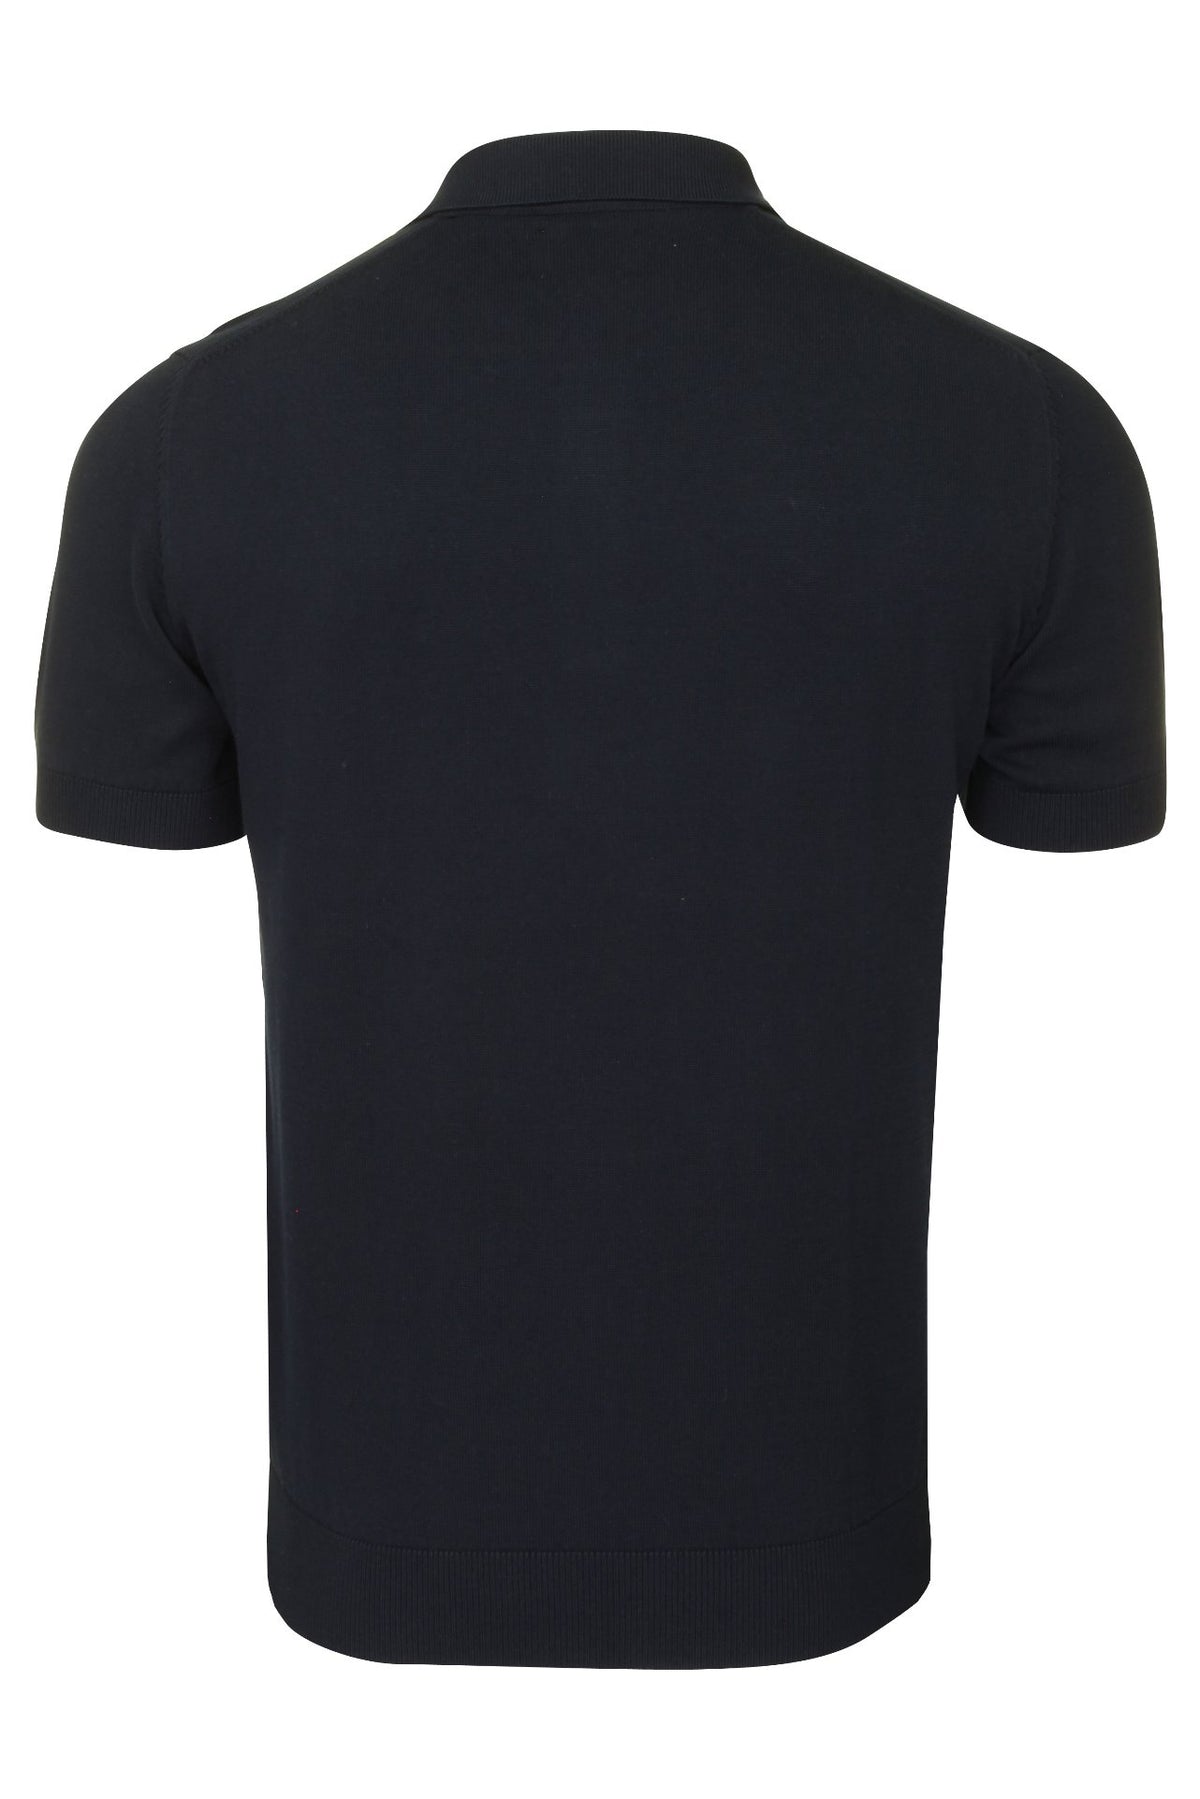 Ben Sherman Mens Signature Knitted Polo T-Shirt - Short Sleeved (Dark Navy, S), 03, 59709, Dark Navy